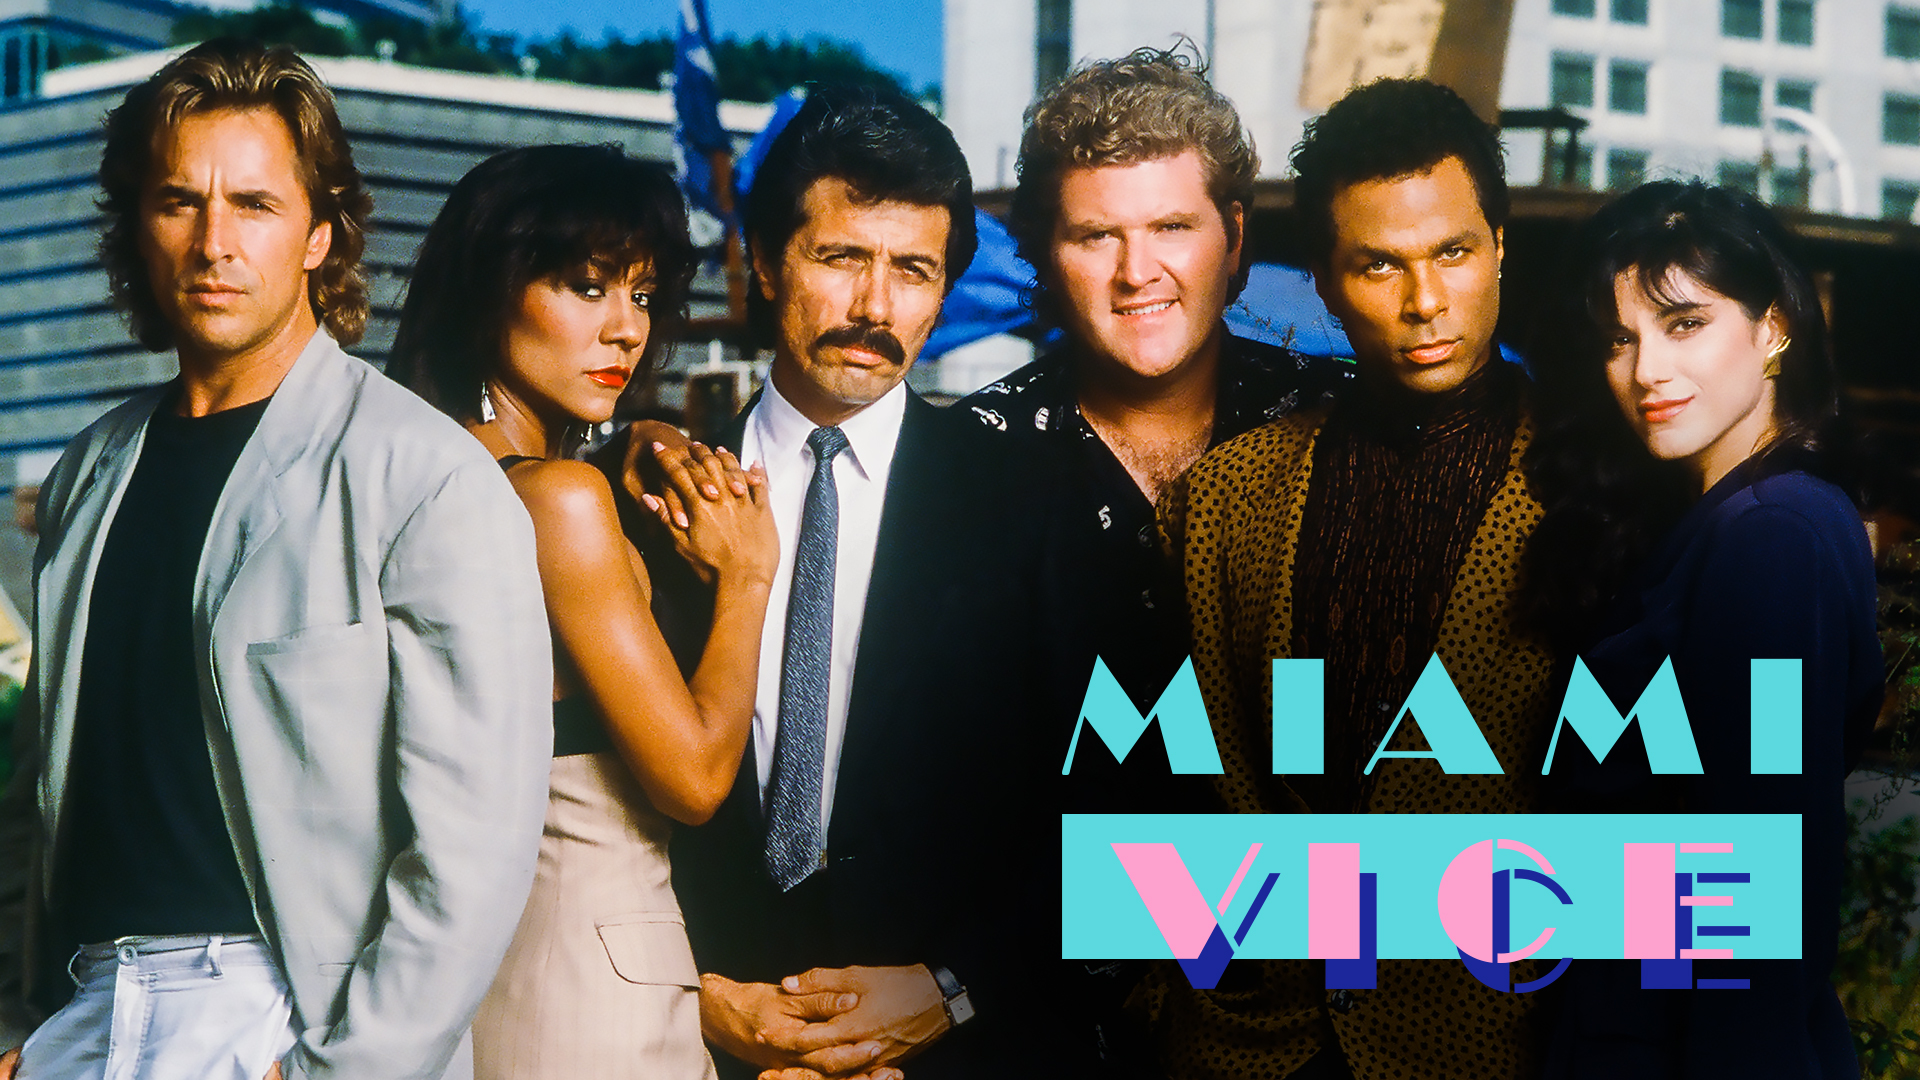 Watch Miami Vice Episodes at NBC.com